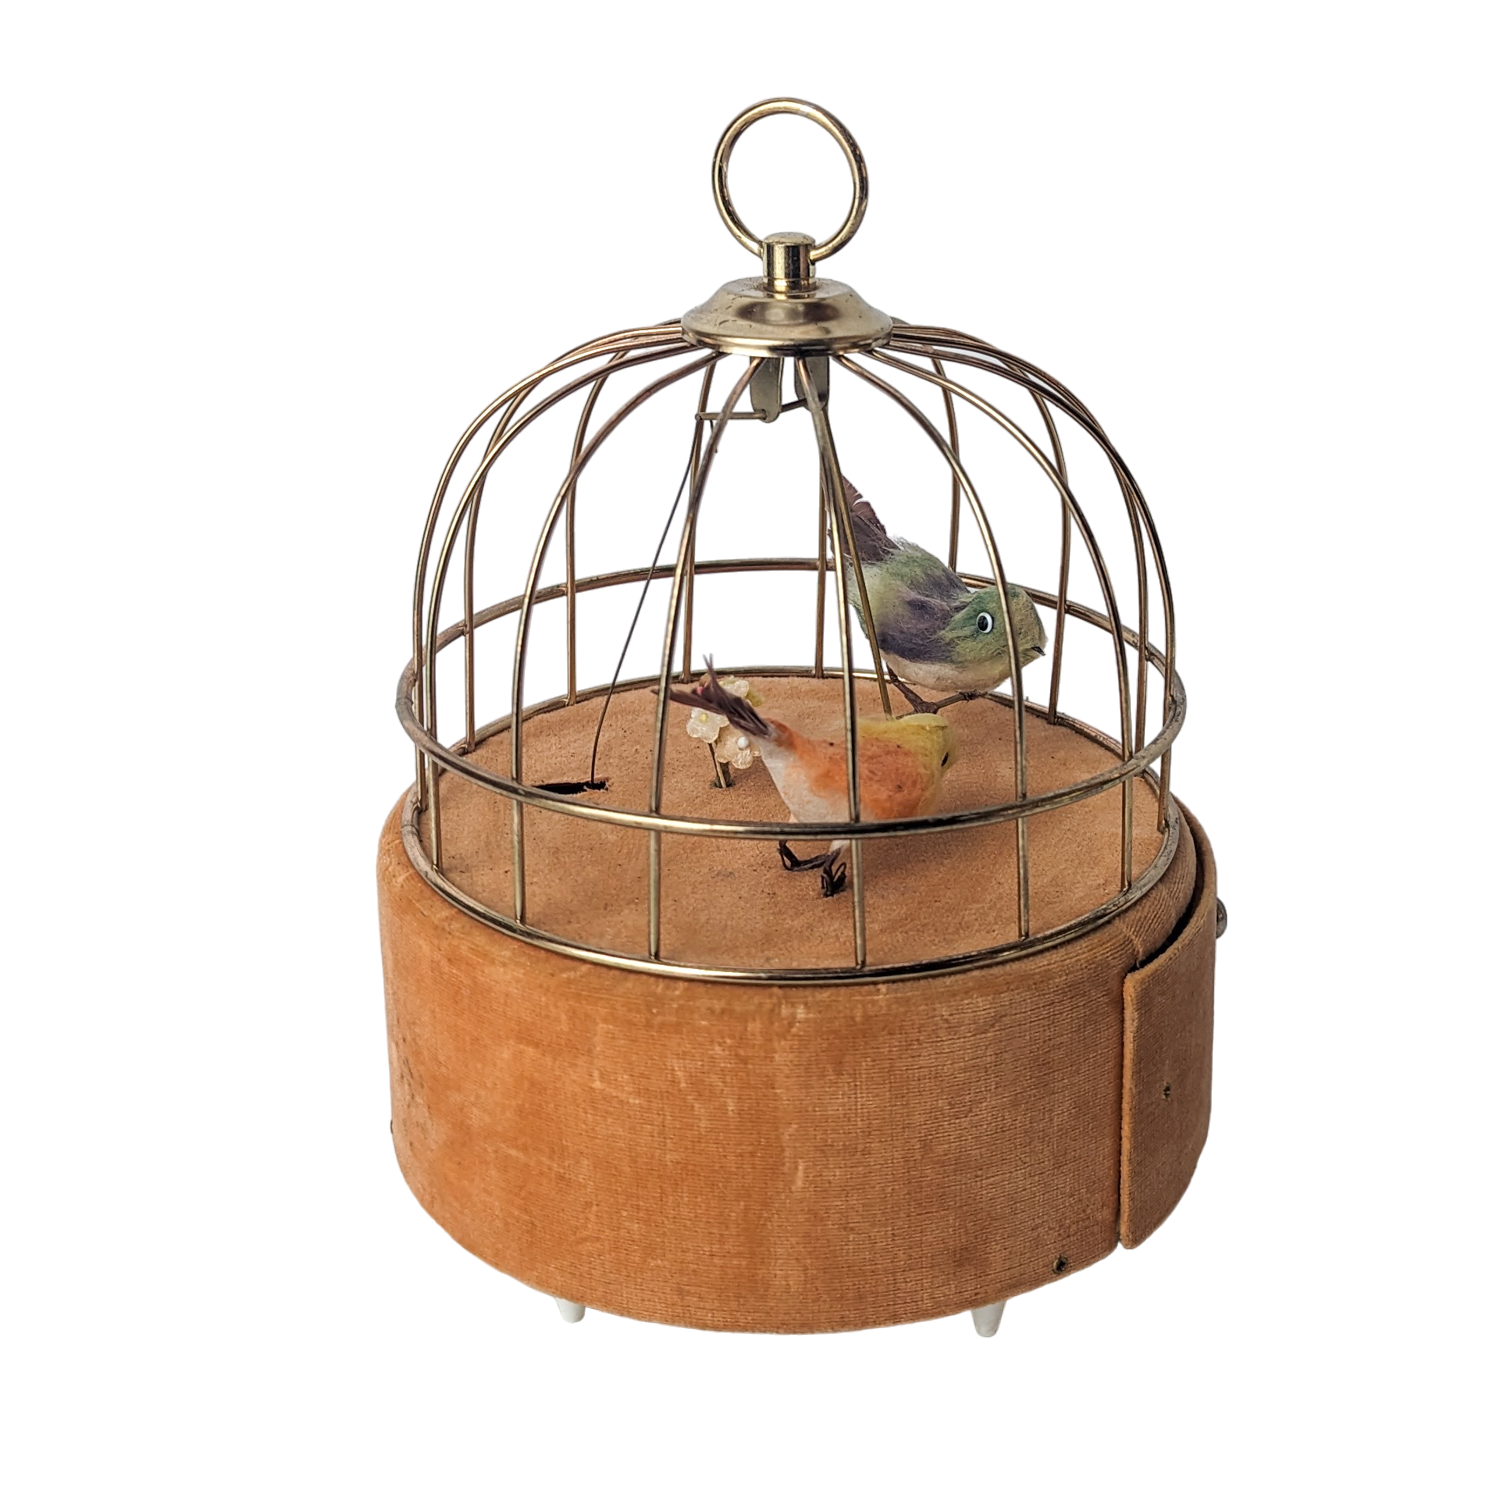 Vintage Mechanical Bird in Birdcage Musical Jewelry Box